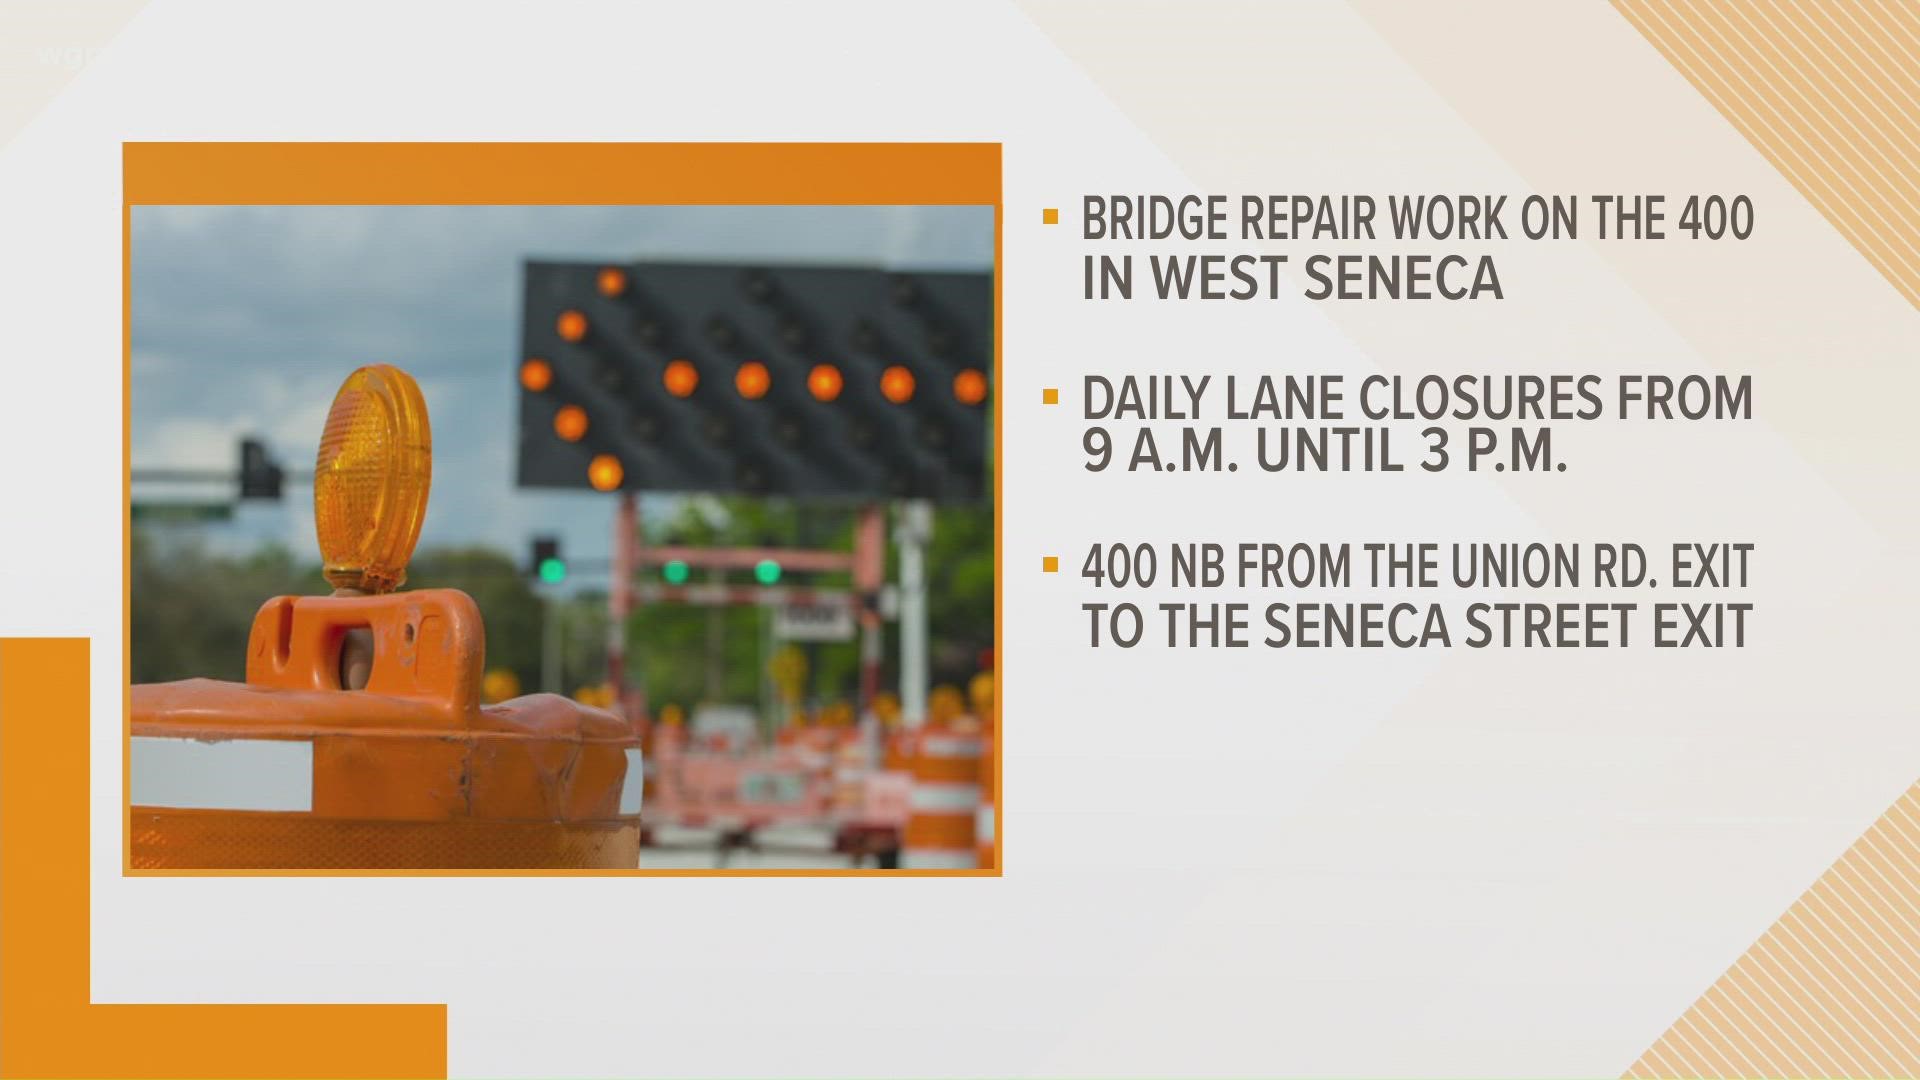 Crews will be starting bridge repair work on Route 400 in West Seneca.